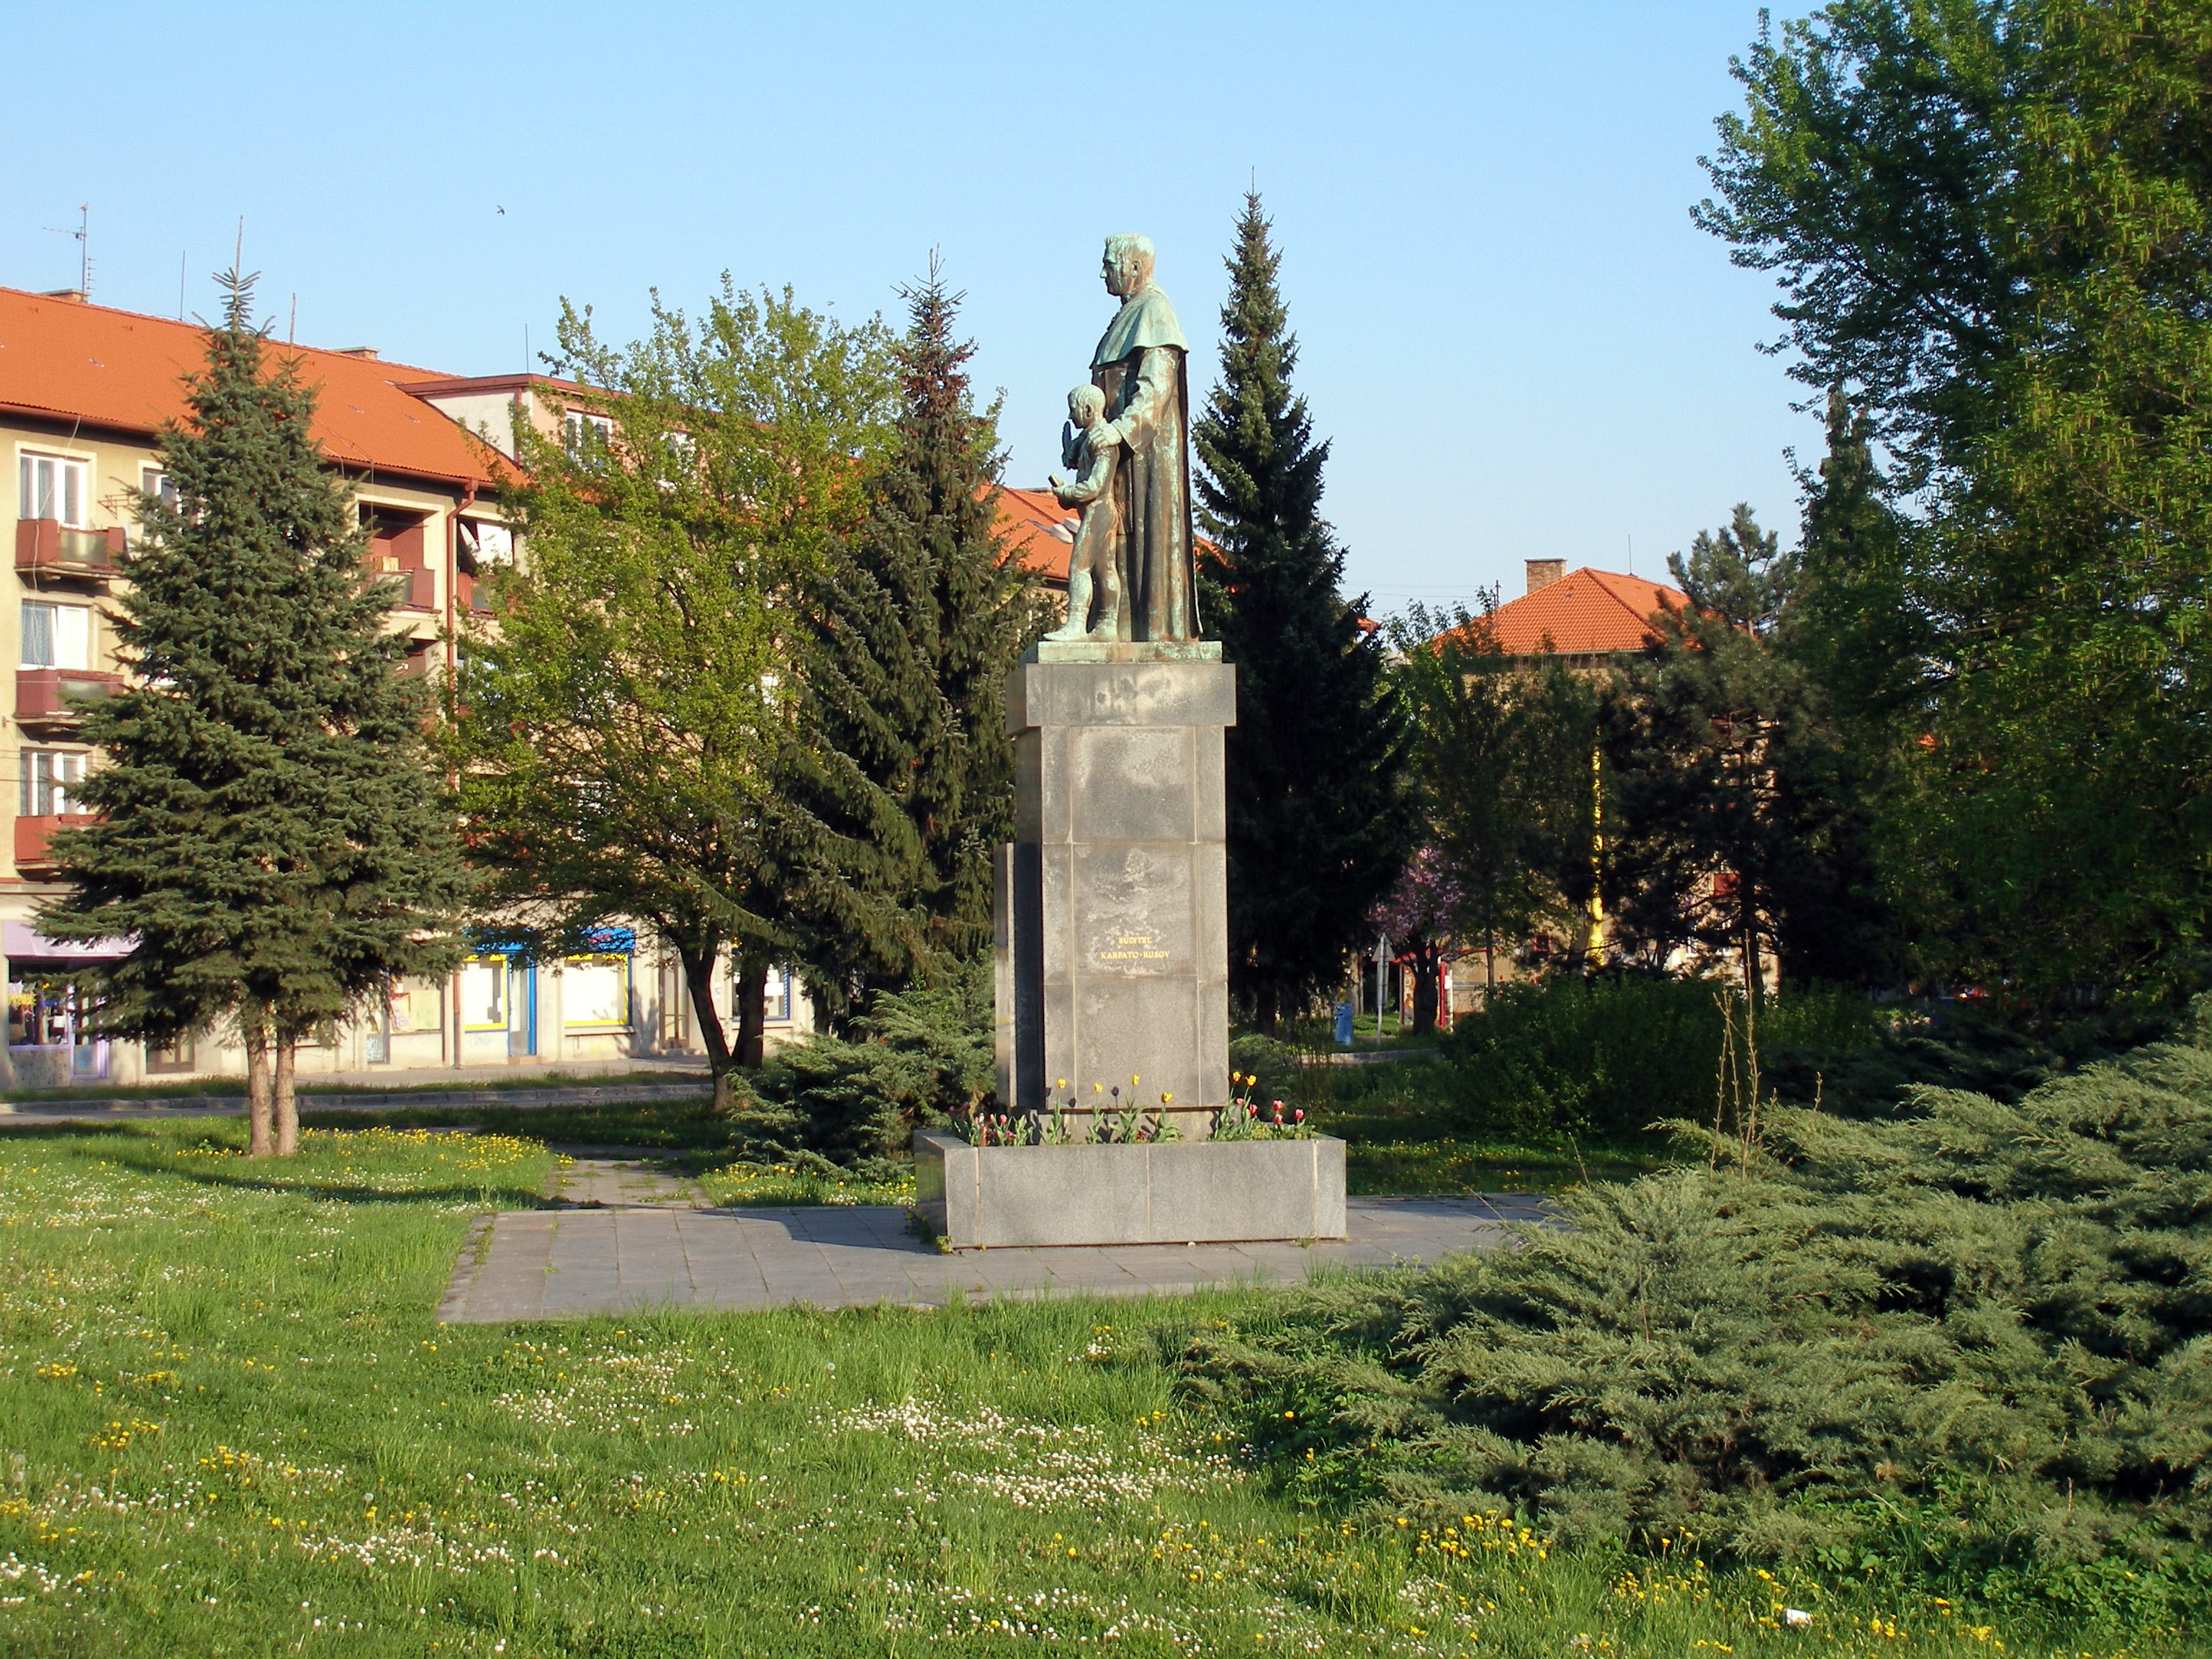 File:Decathlon Prešov 18 Slovakia1.jpg - Wikimedia Commons